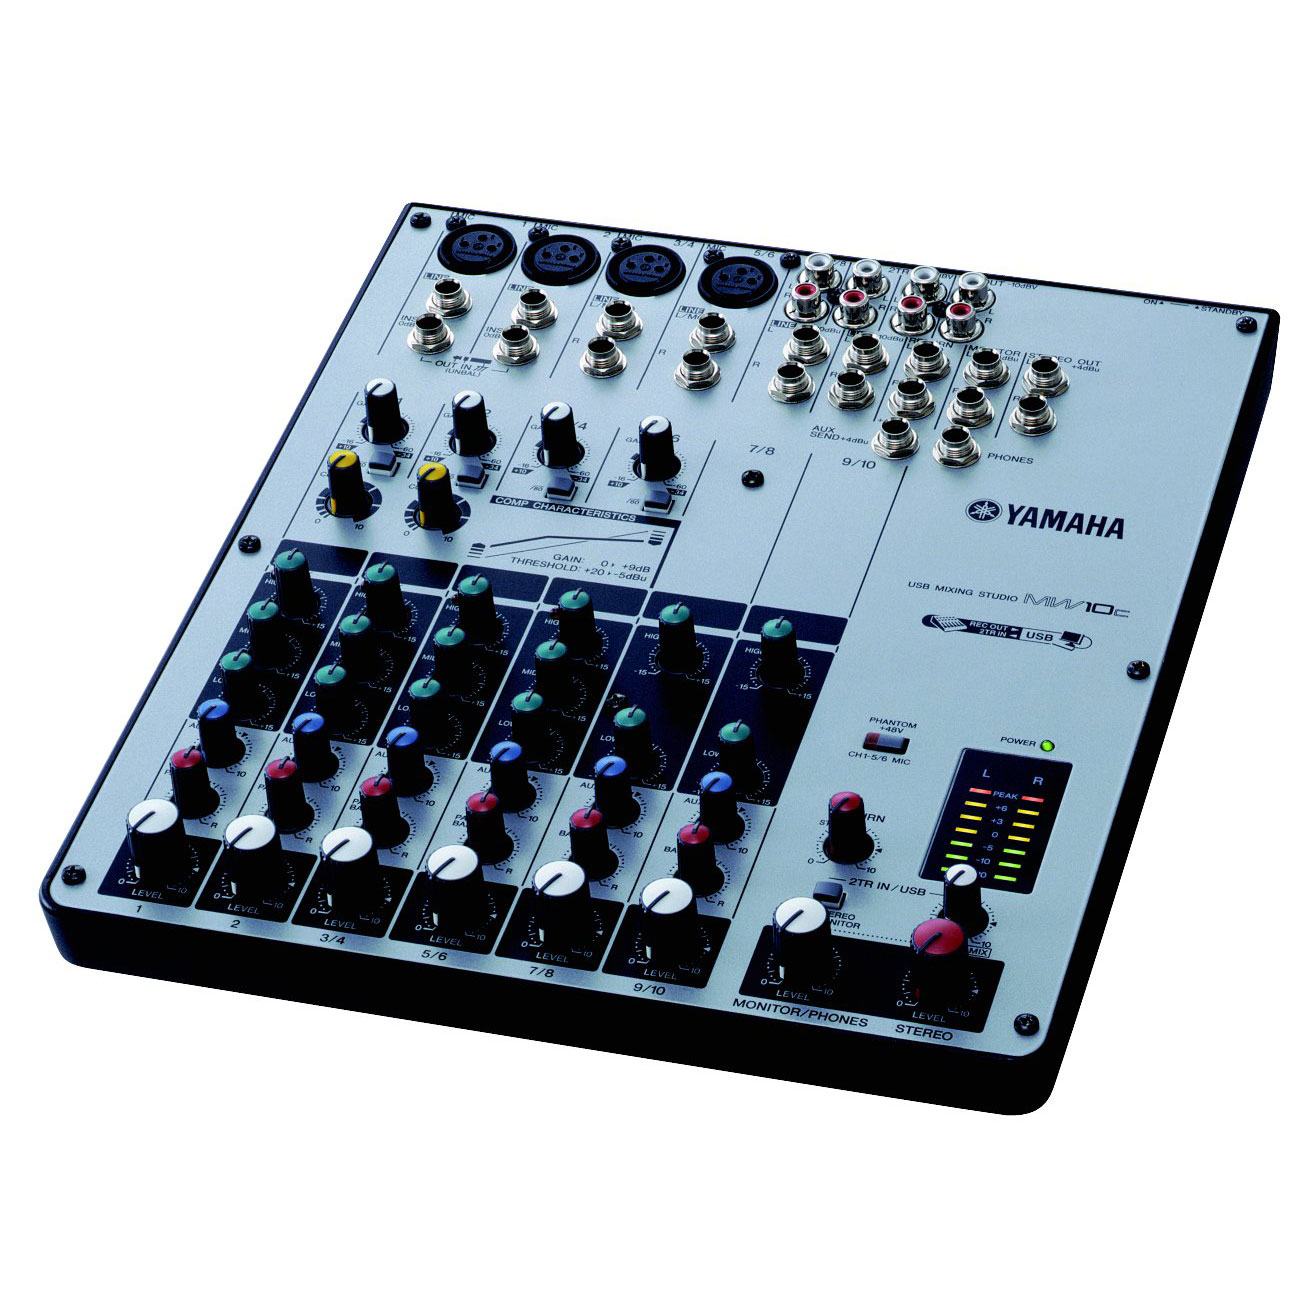 MW10c - Yamaha MW10c - Audiofanzine